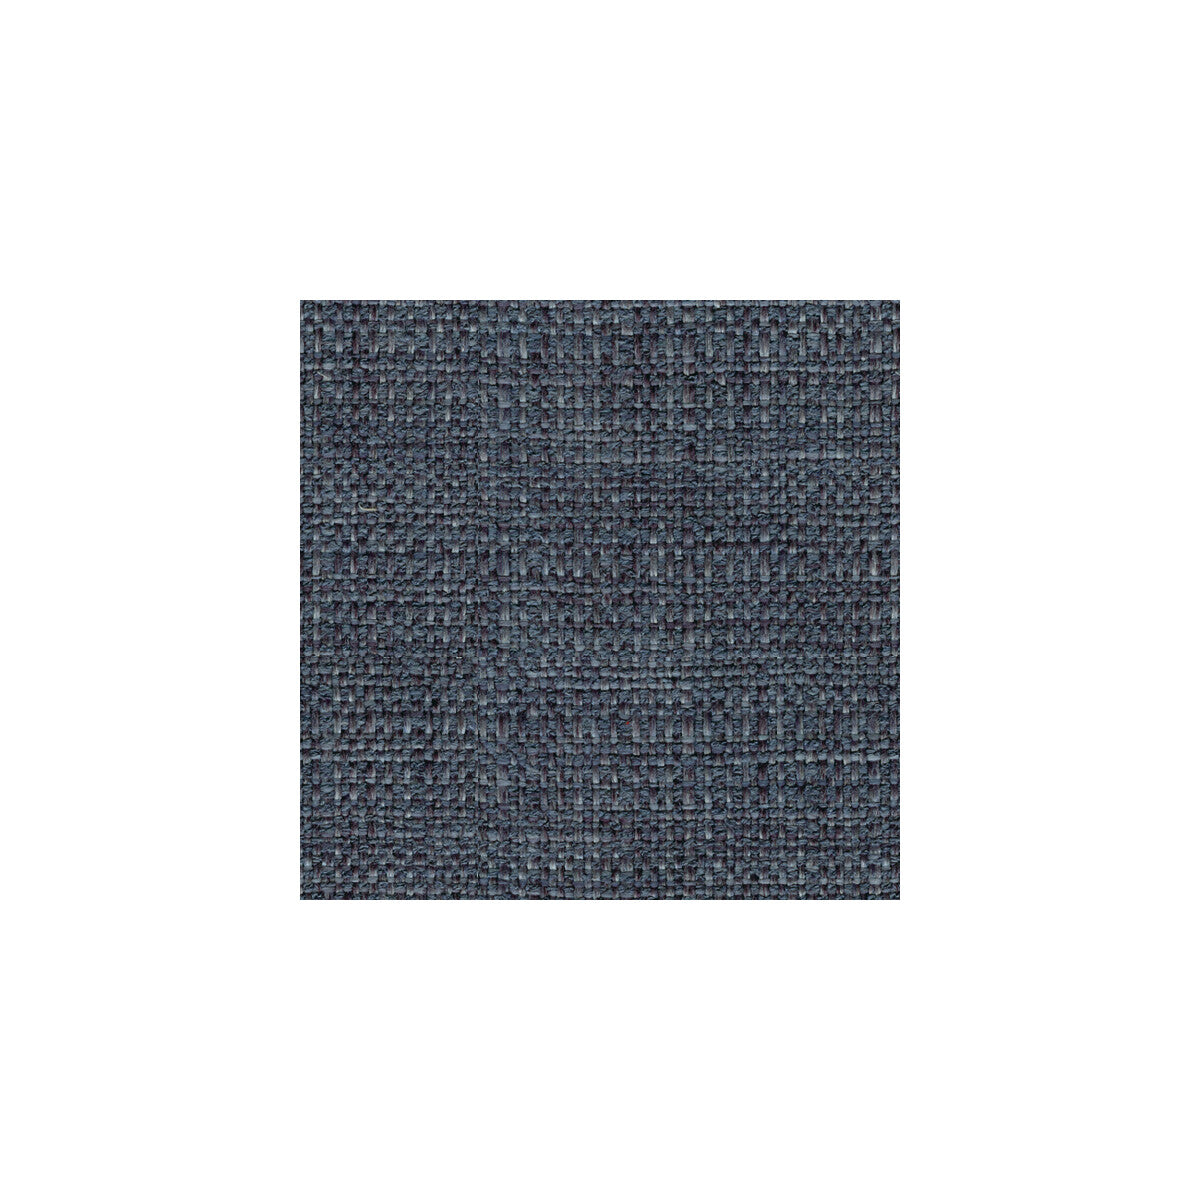 Kf Smt fabric - pattern 31747.5.0 - by Kravet Smart